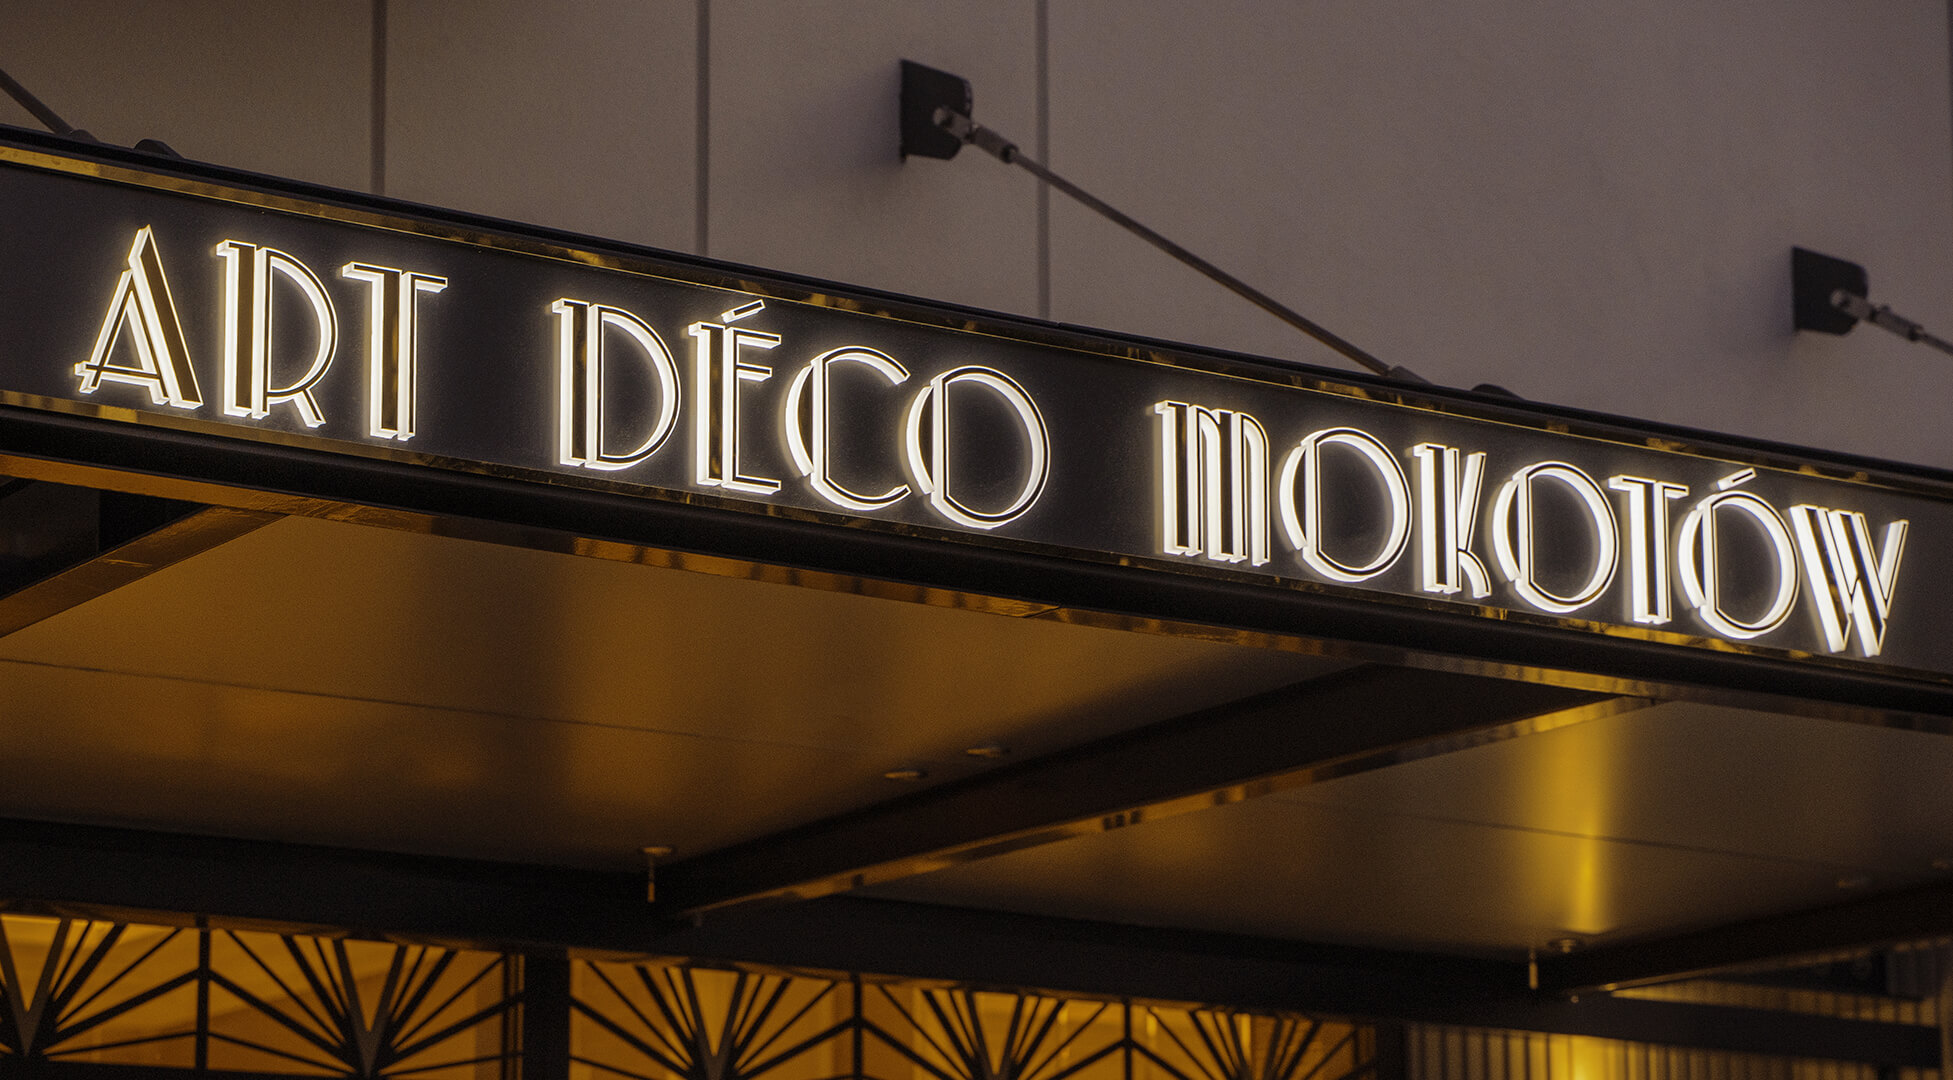 Art Deco Mokotow - Goldfarbene Dibond-Kassette über dem Mokotow-Eingang im Art-Déco-Stil, mit LED-Beleuchtung.